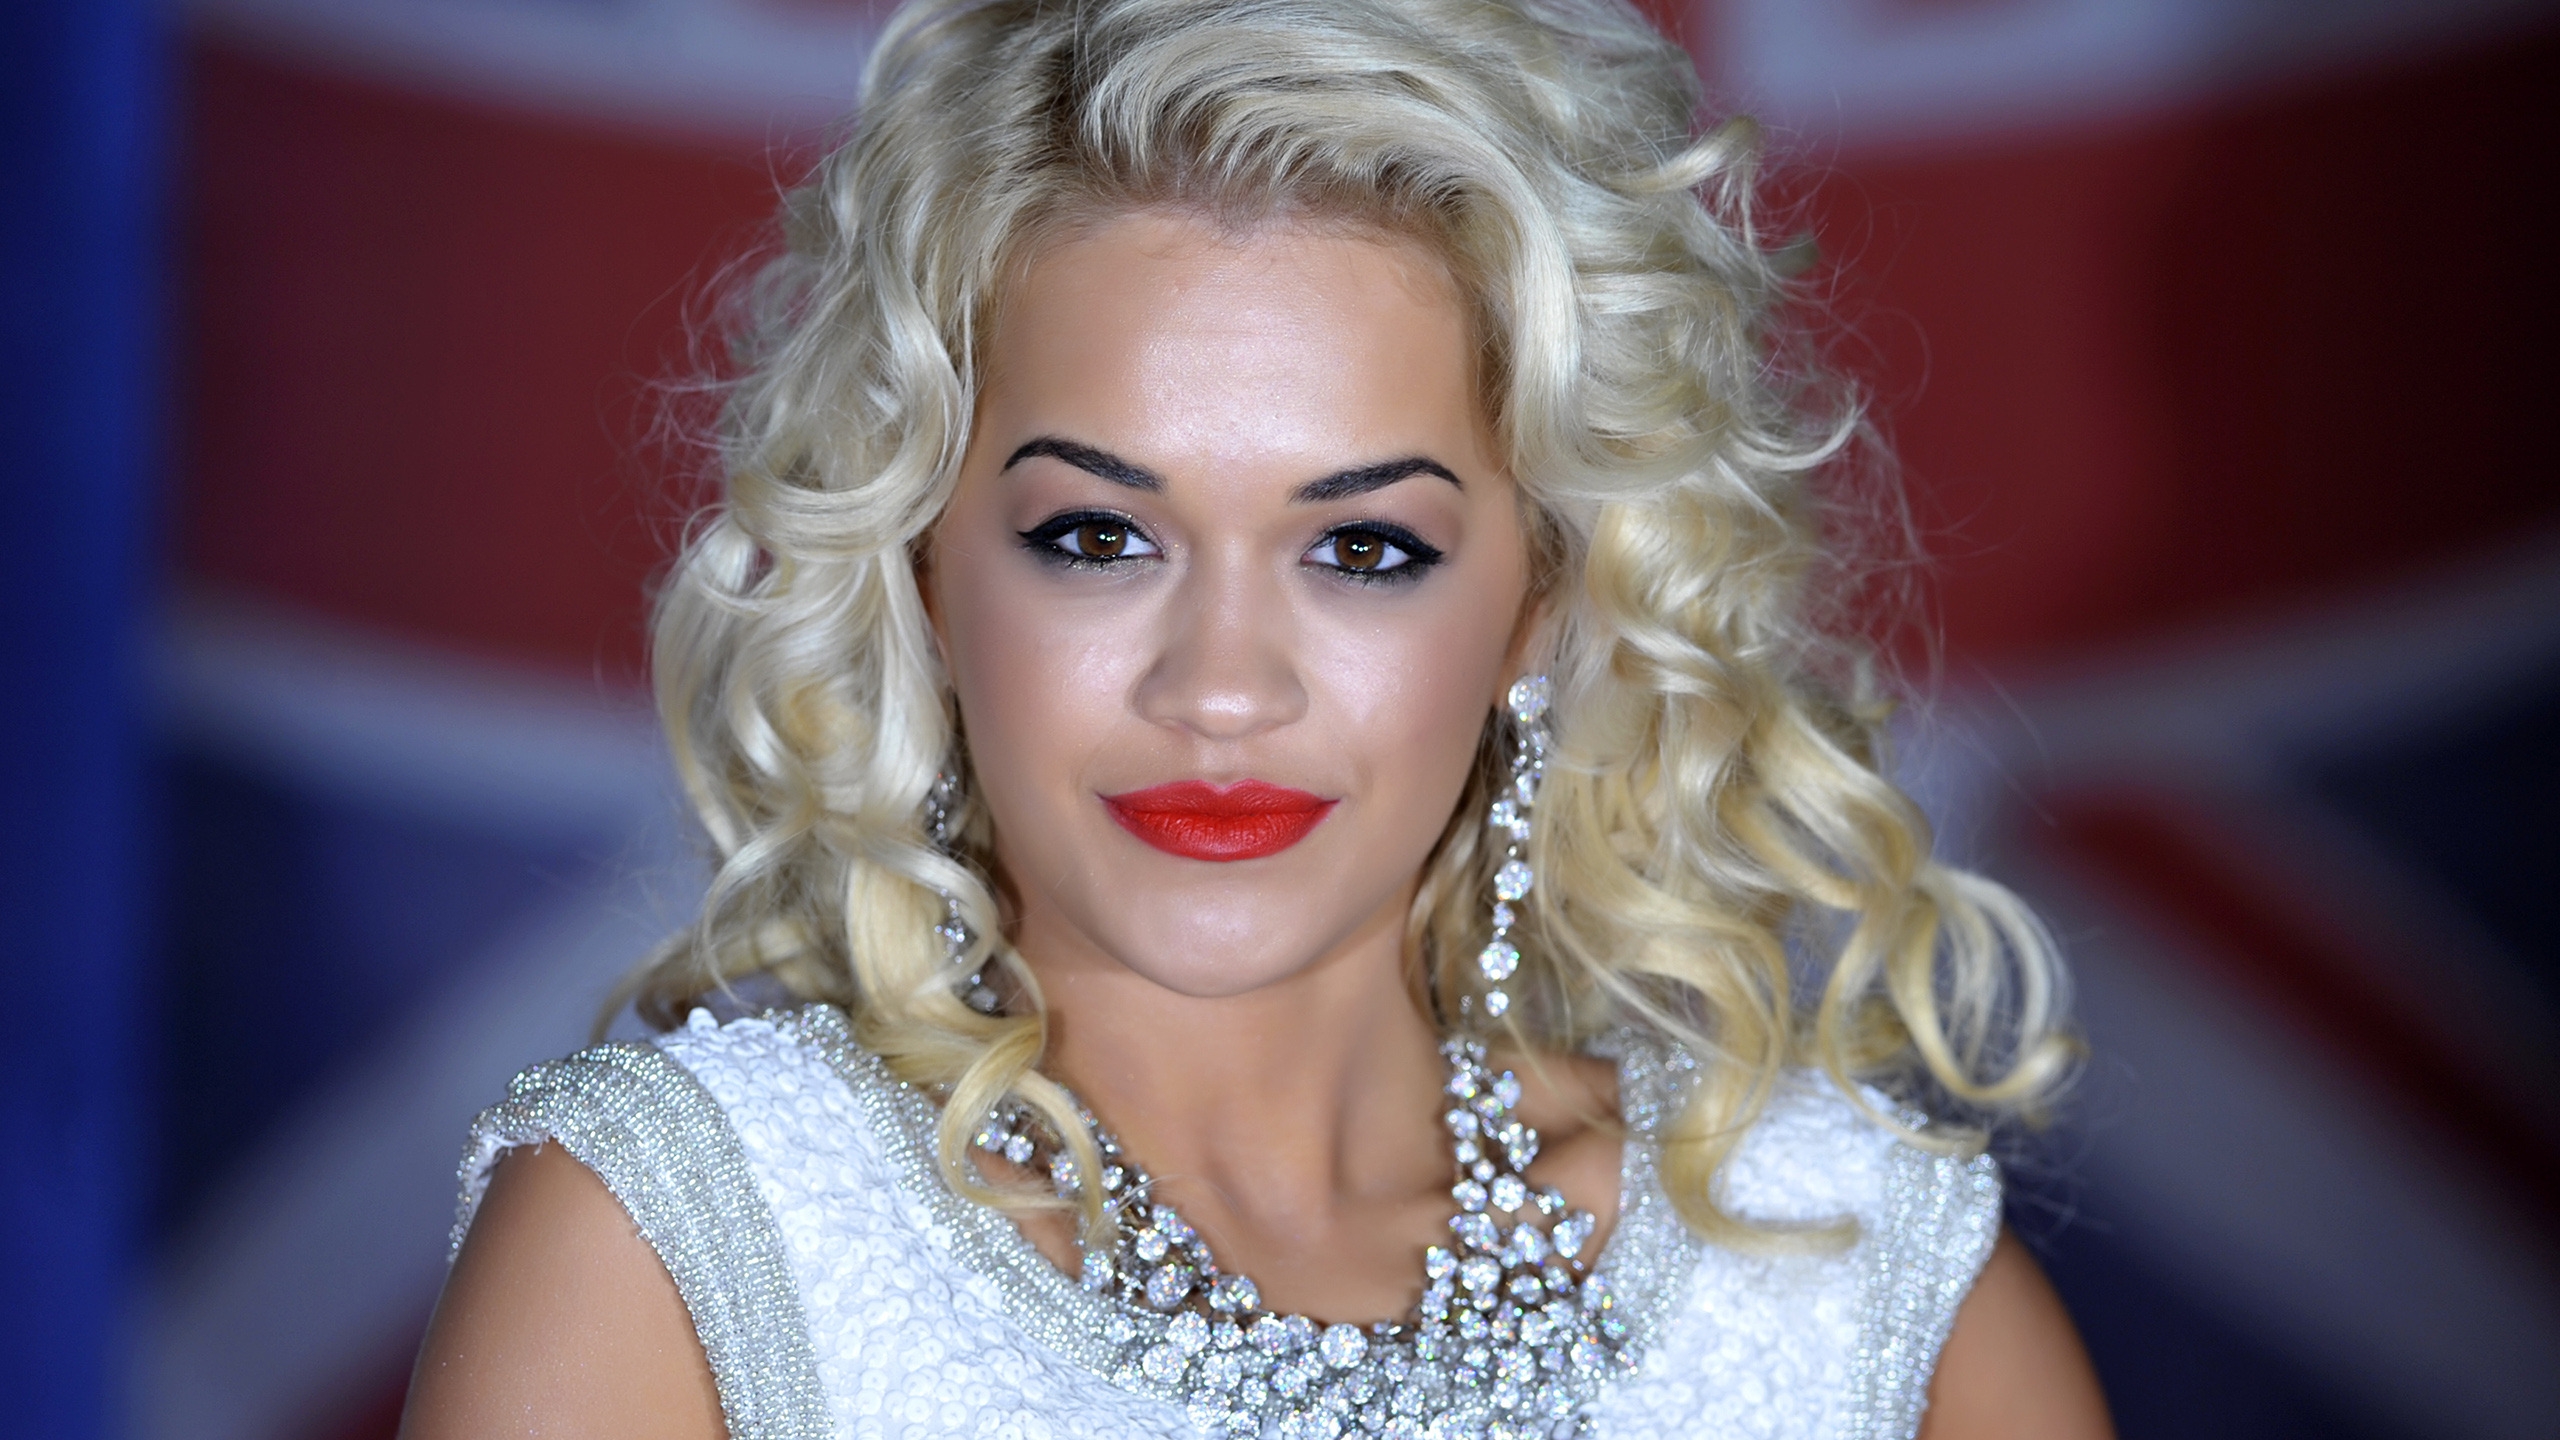 Rita Ora for 2560x1440 HDTV resolution